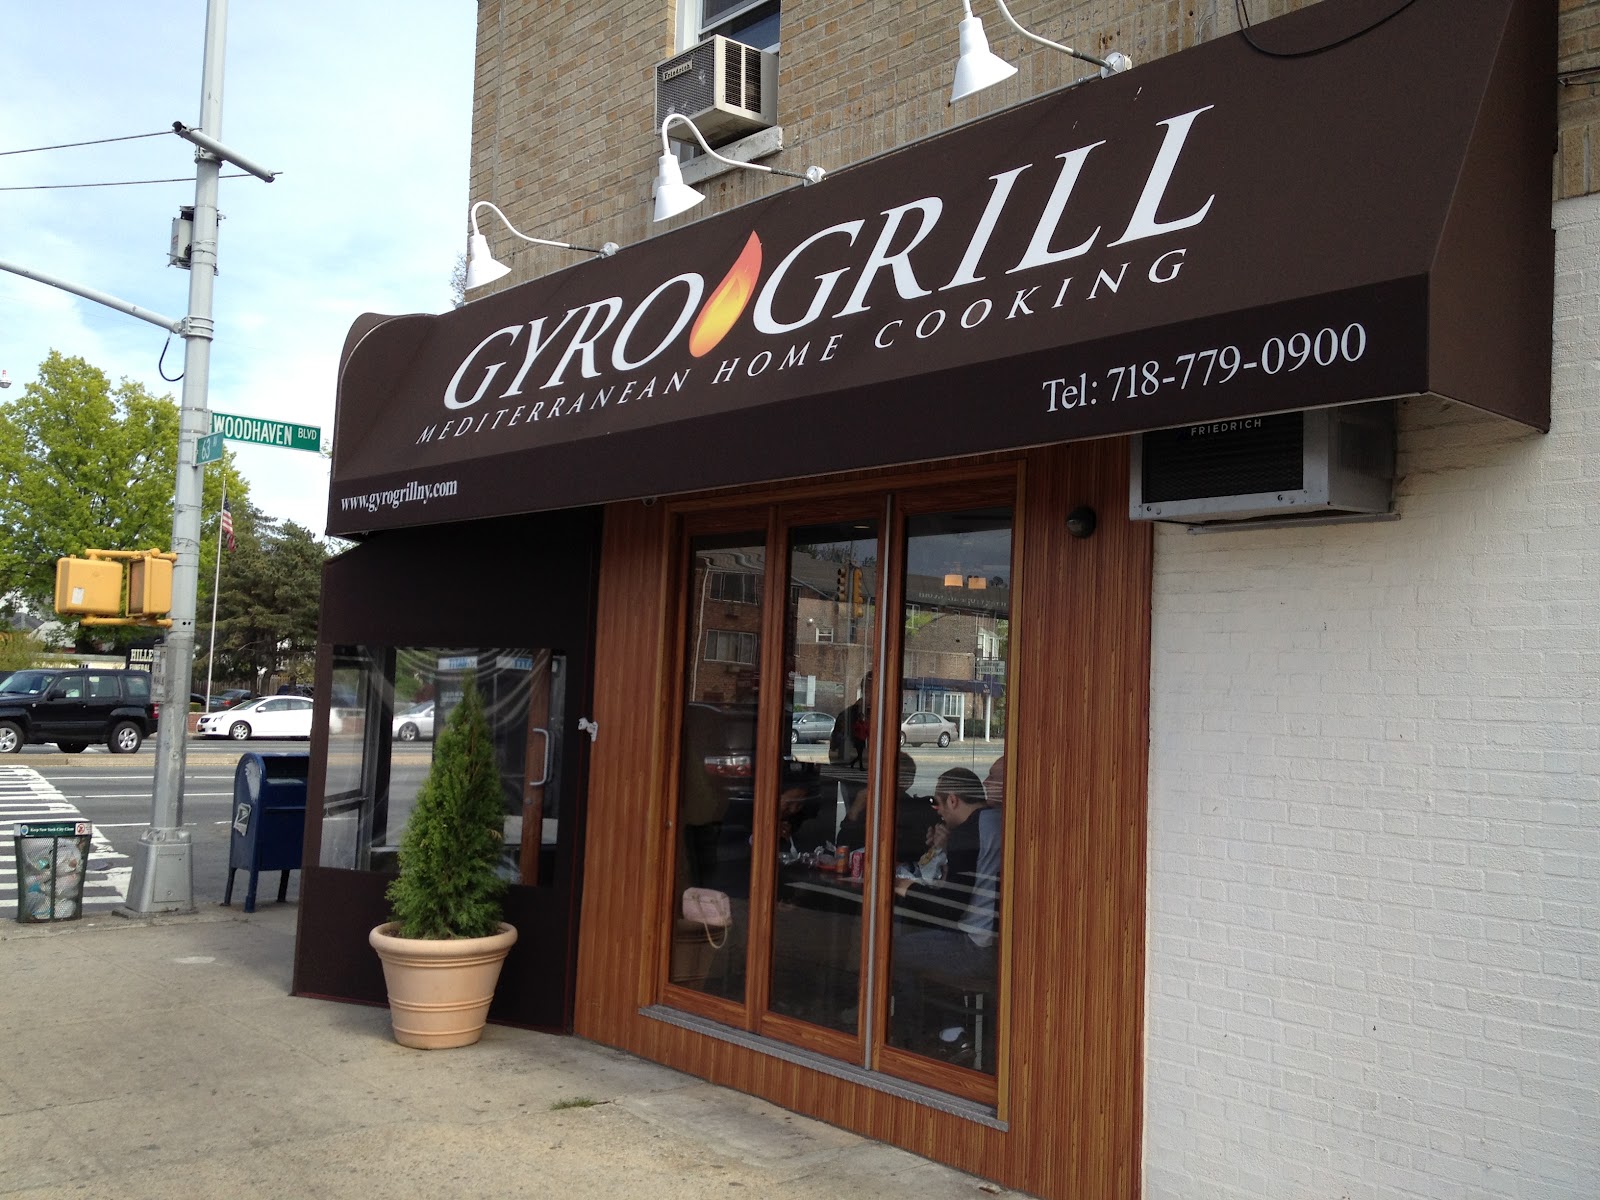 Giro grill